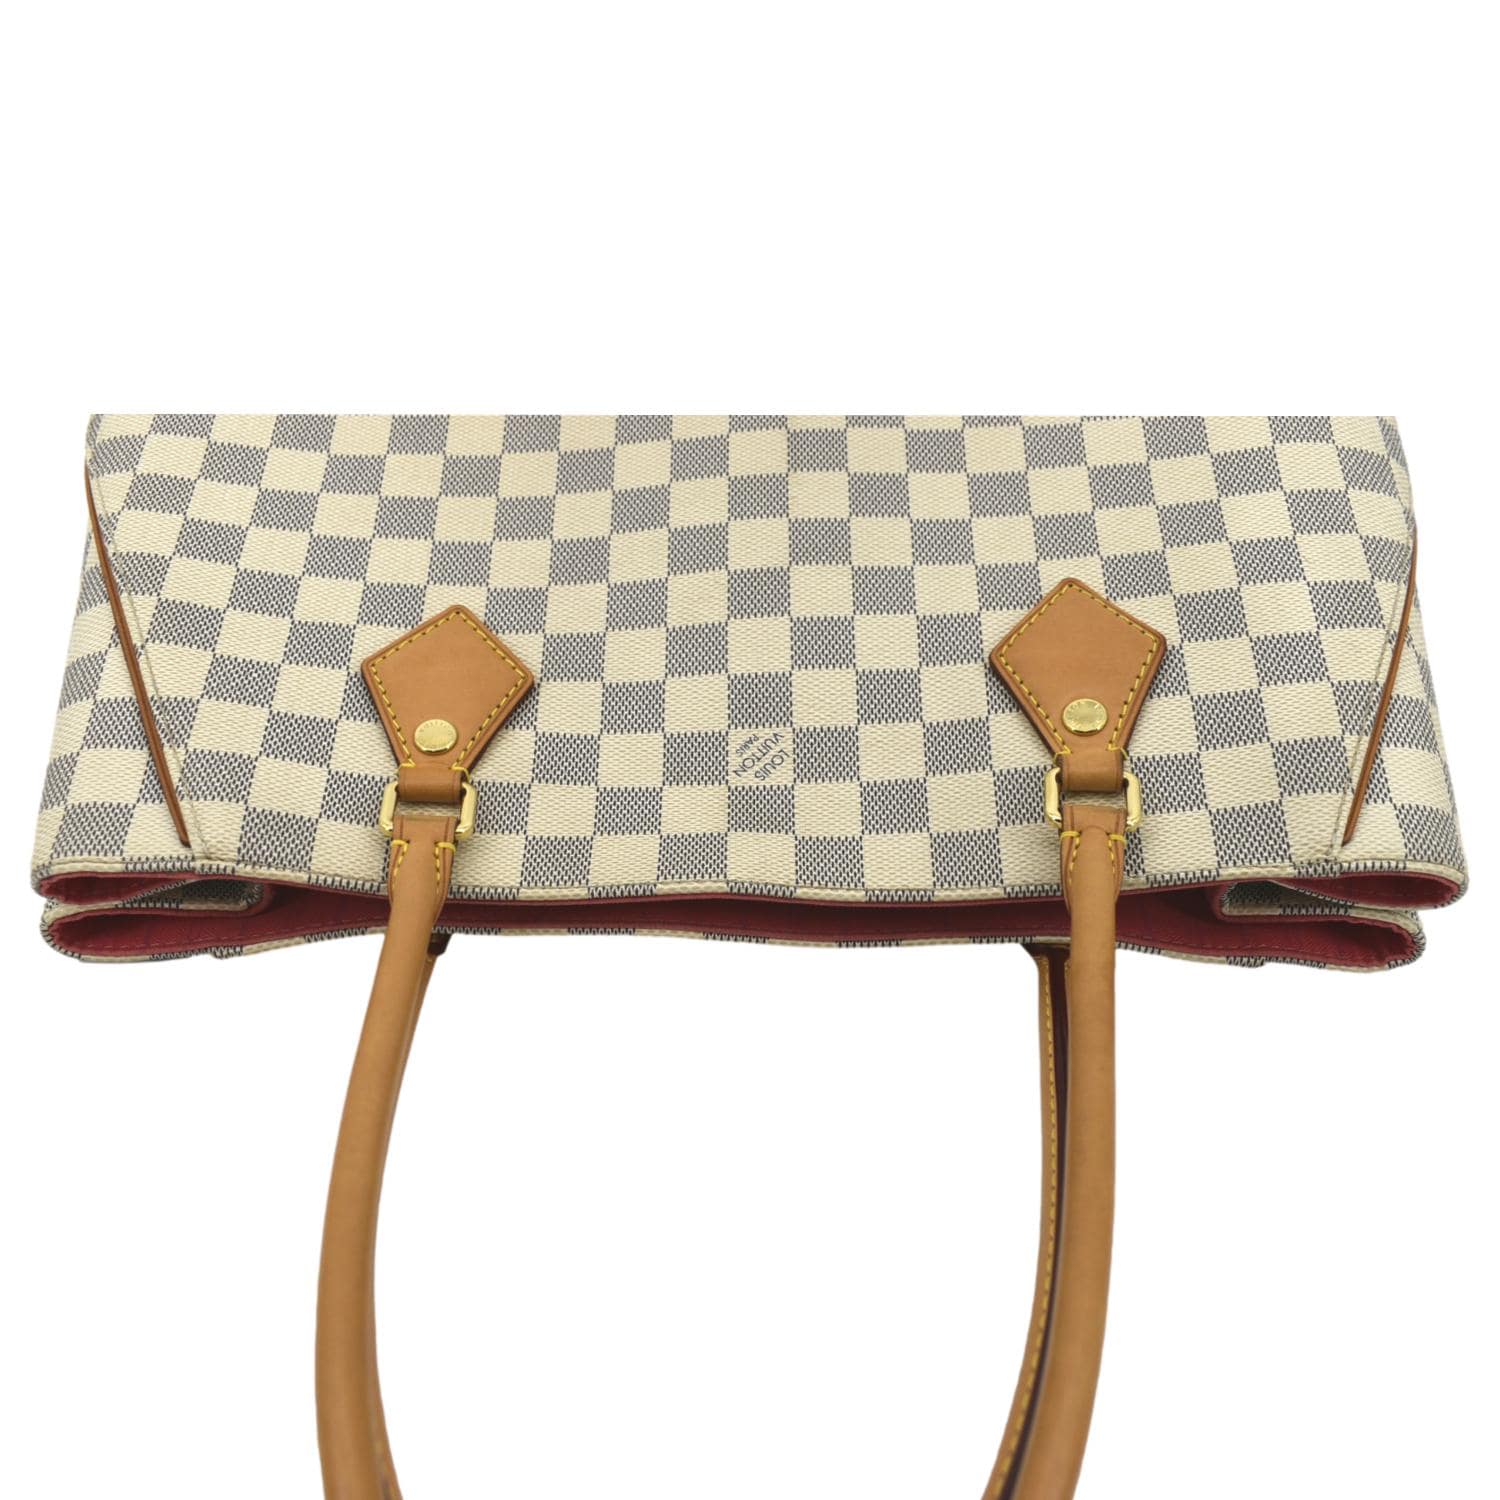 N41449 Louis Vuitton Monogram Damier Azur Calvi Handbag